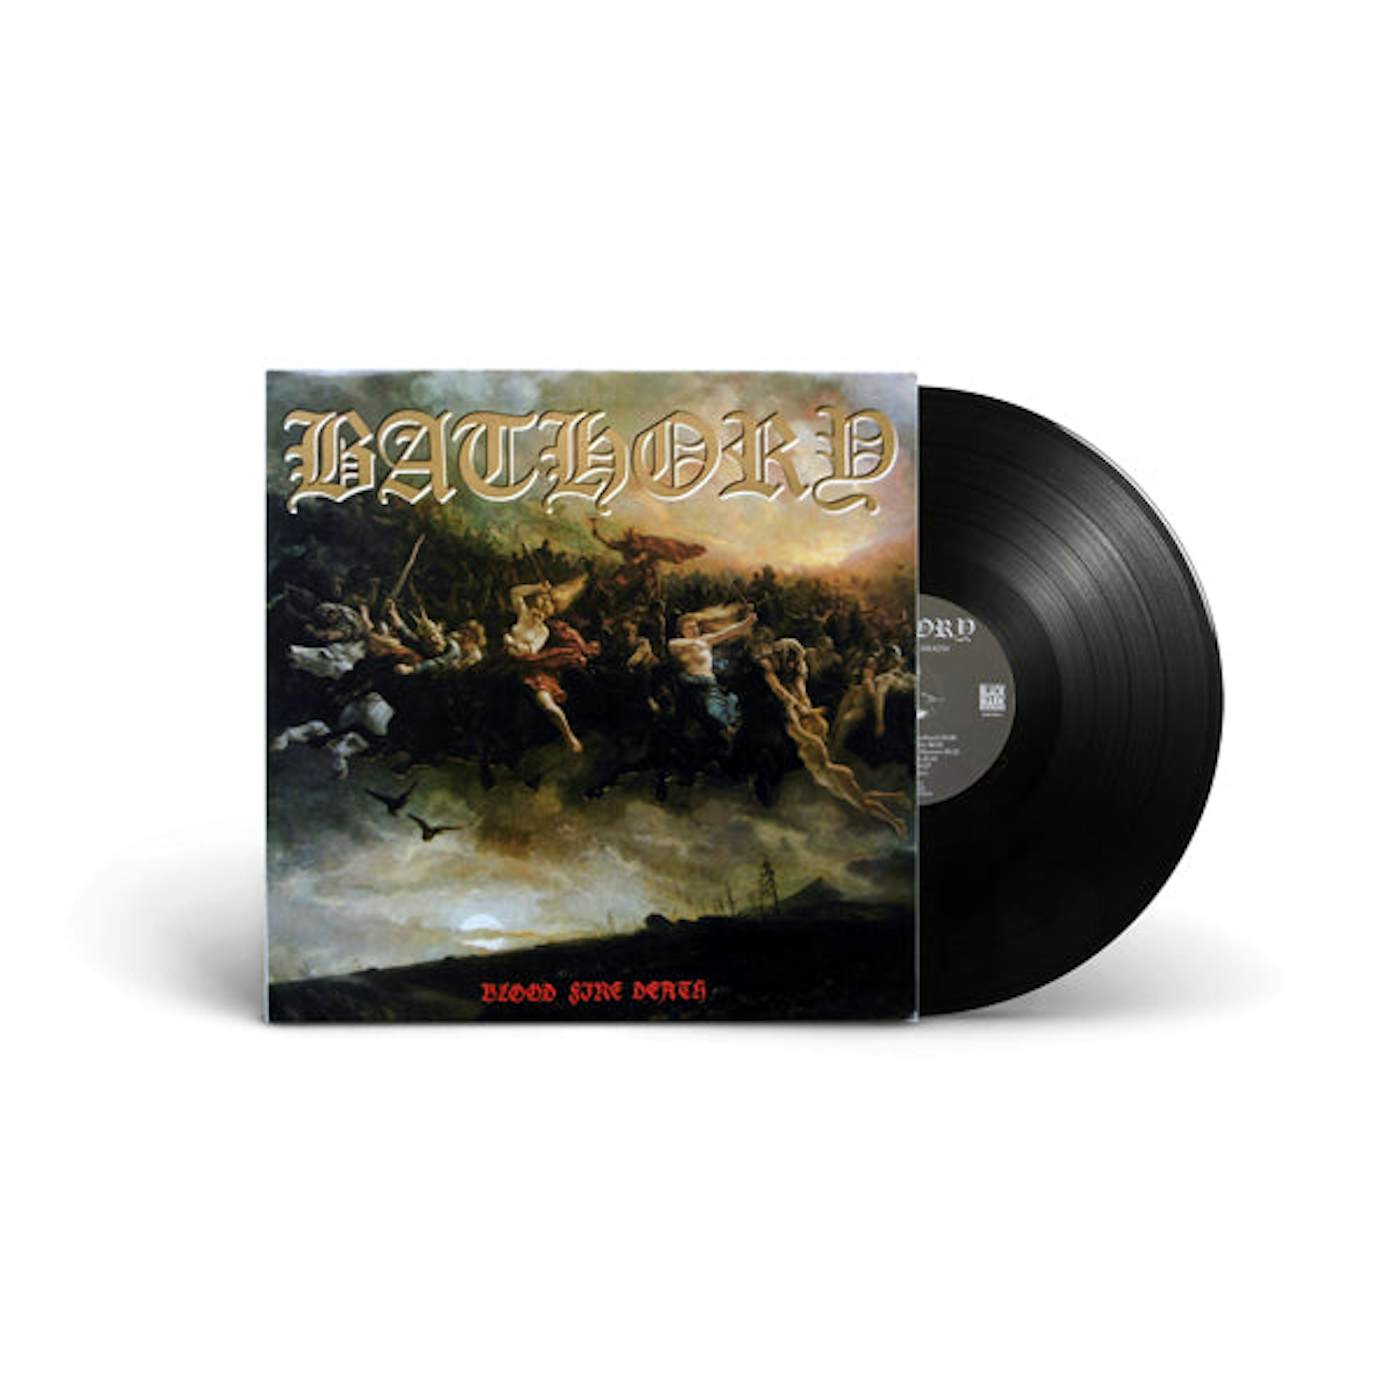 Bathory LP - Blood Fire Death (Vinyl)